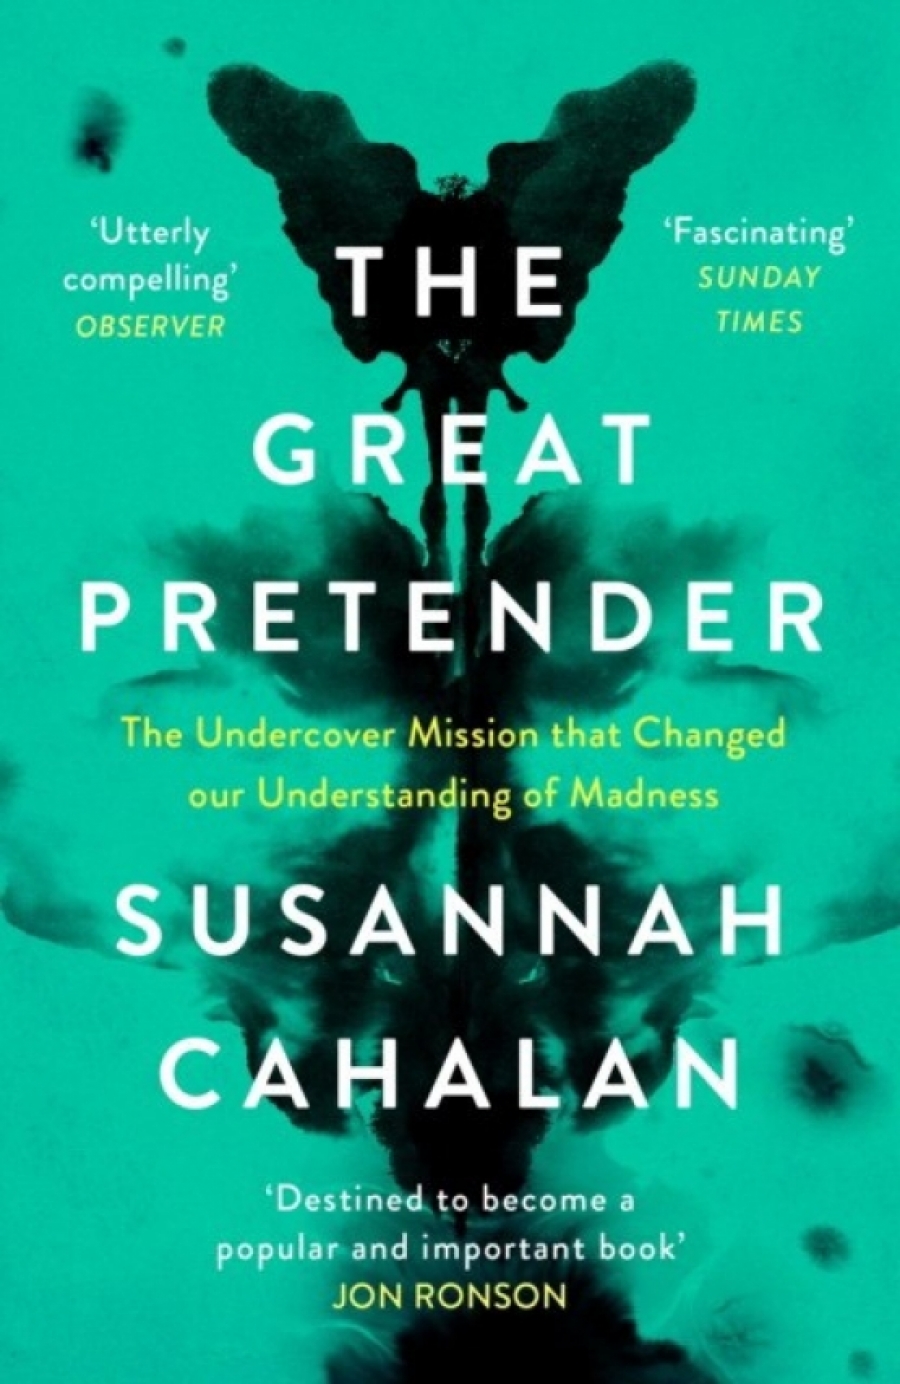 Cahalan Susannah Great pretender 